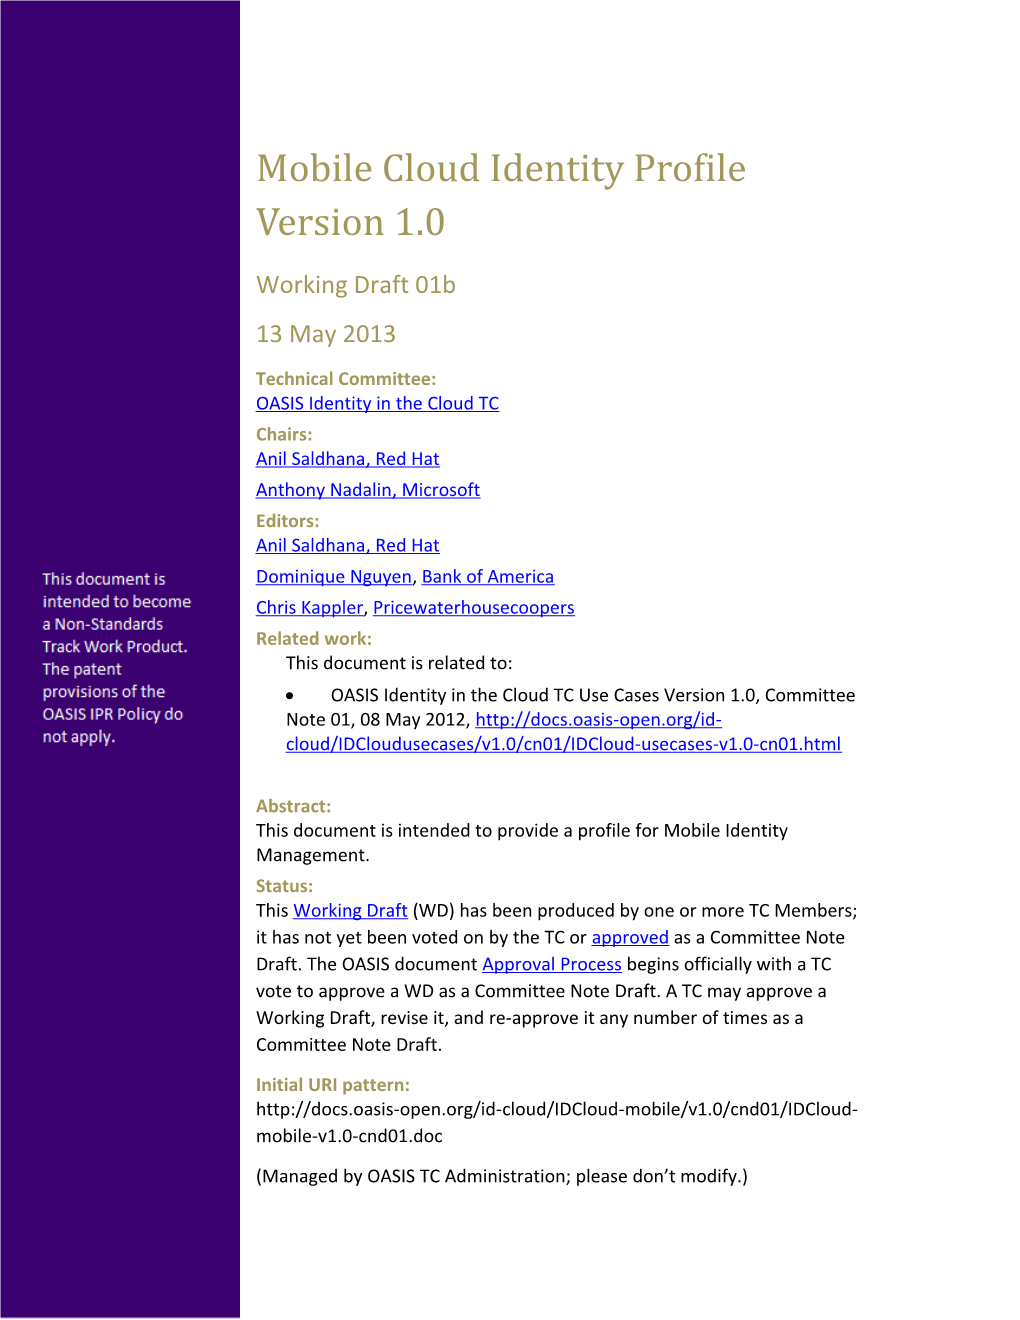 Mobile Cloud Identity Profile Version 1.0